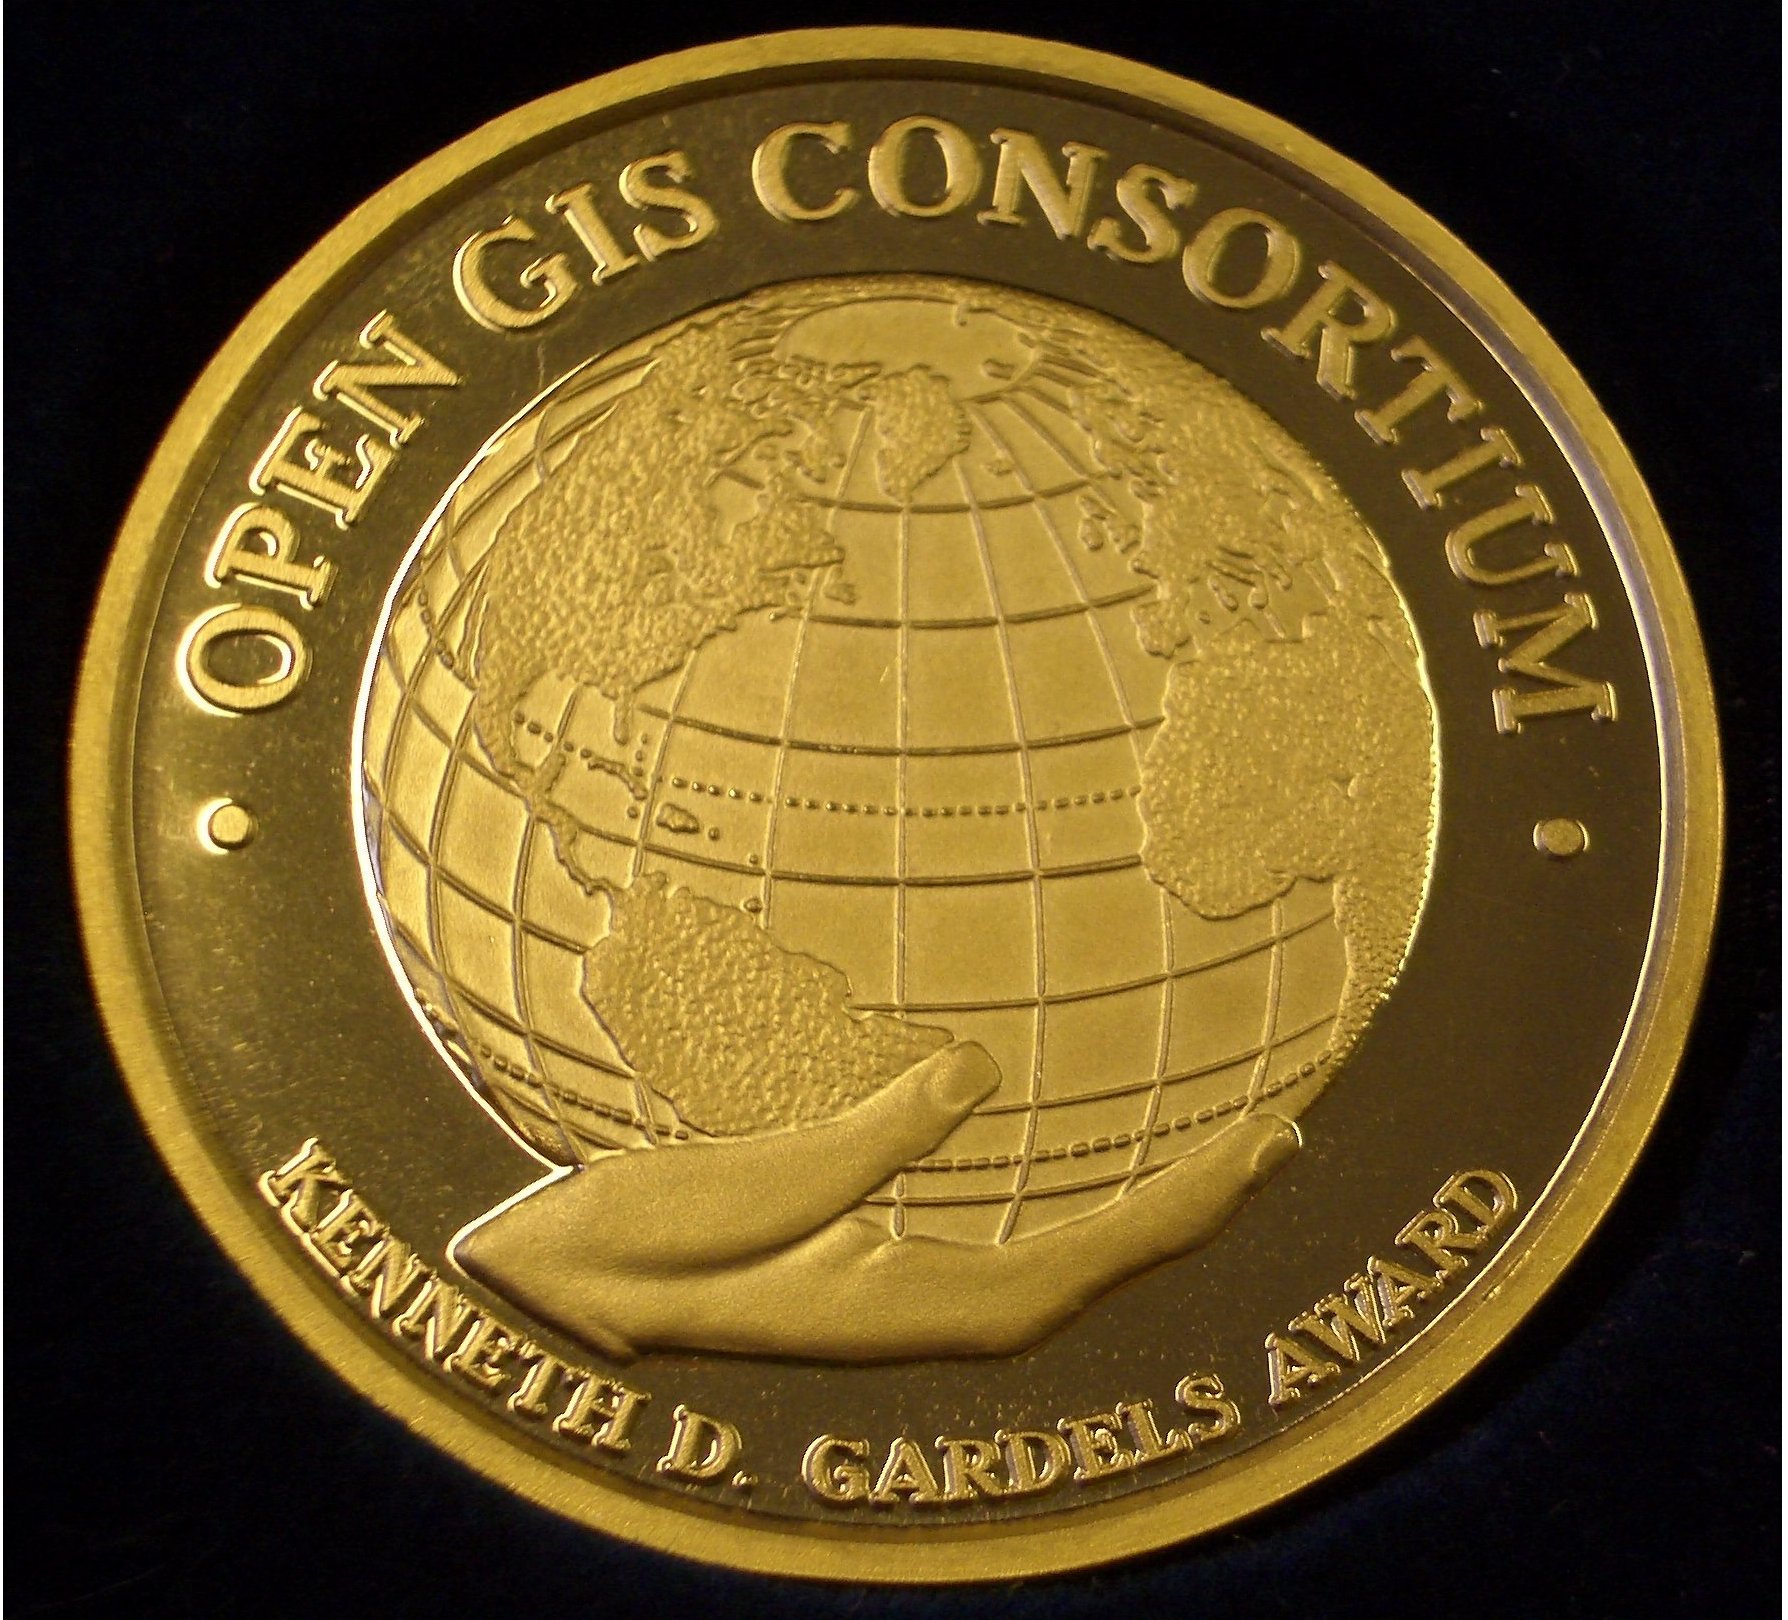 Gardels Award